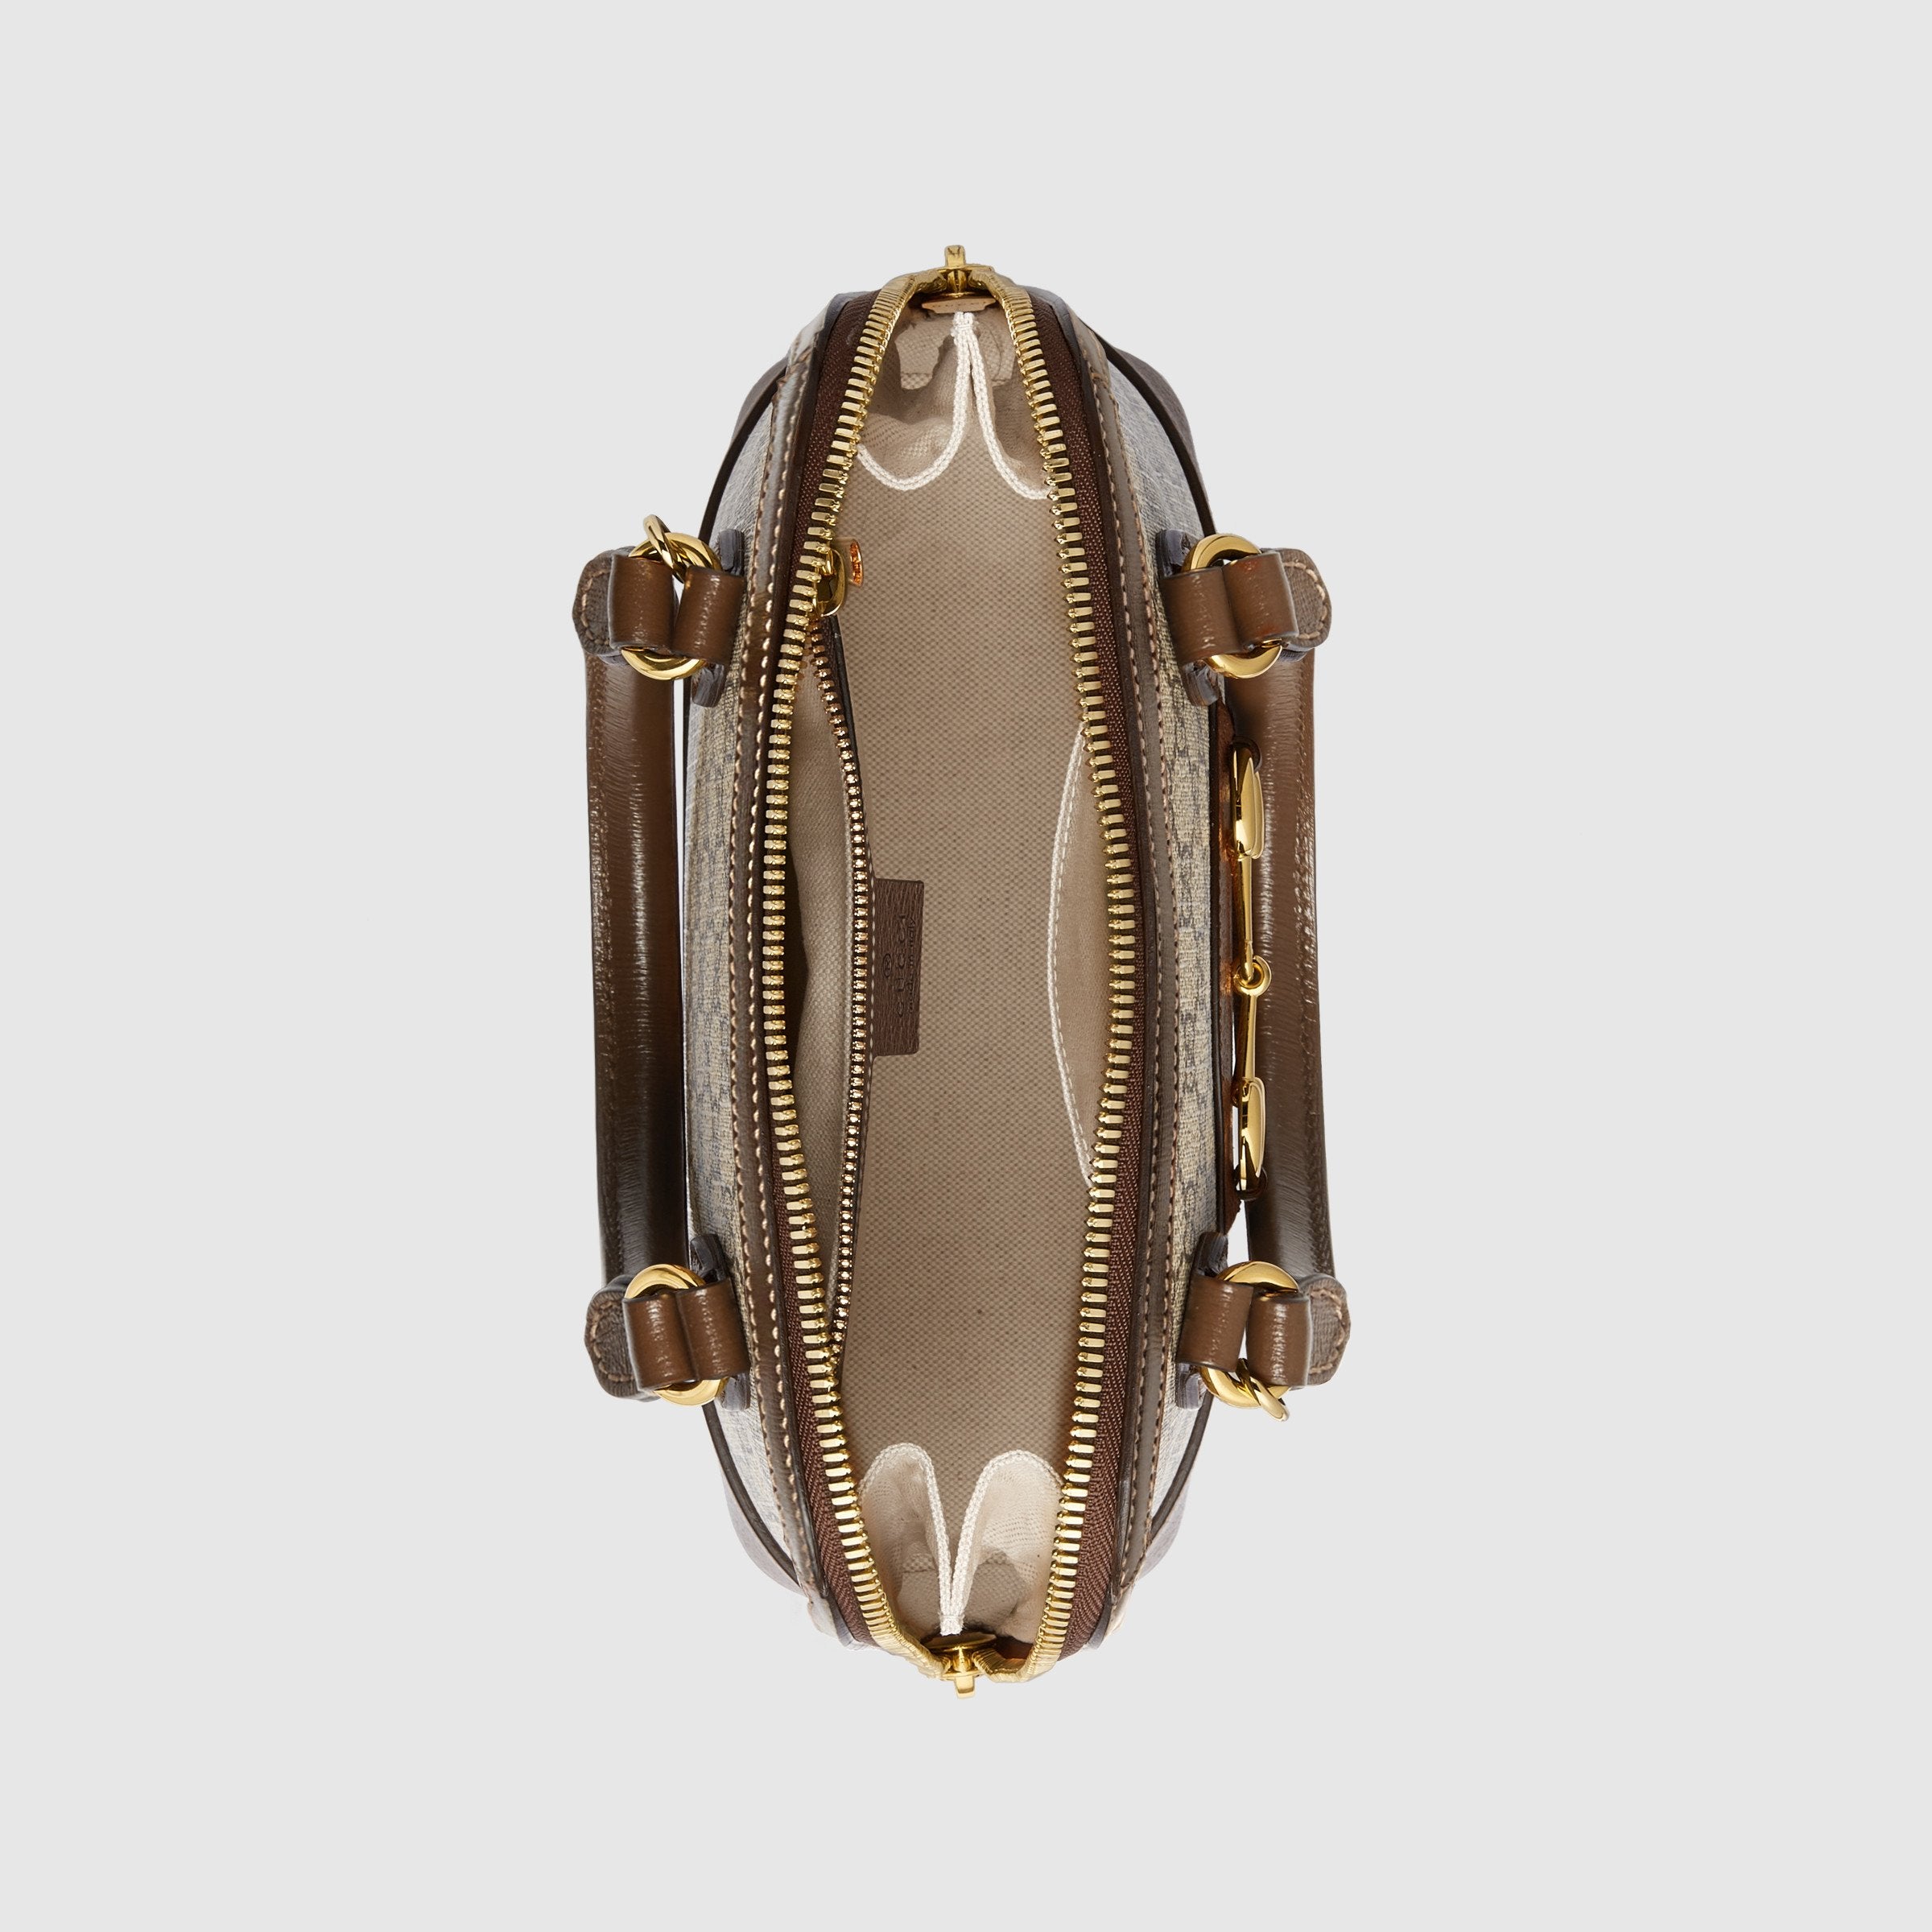 Gucci 1955 Horsebit Small Top Handle Bag GG Supreme